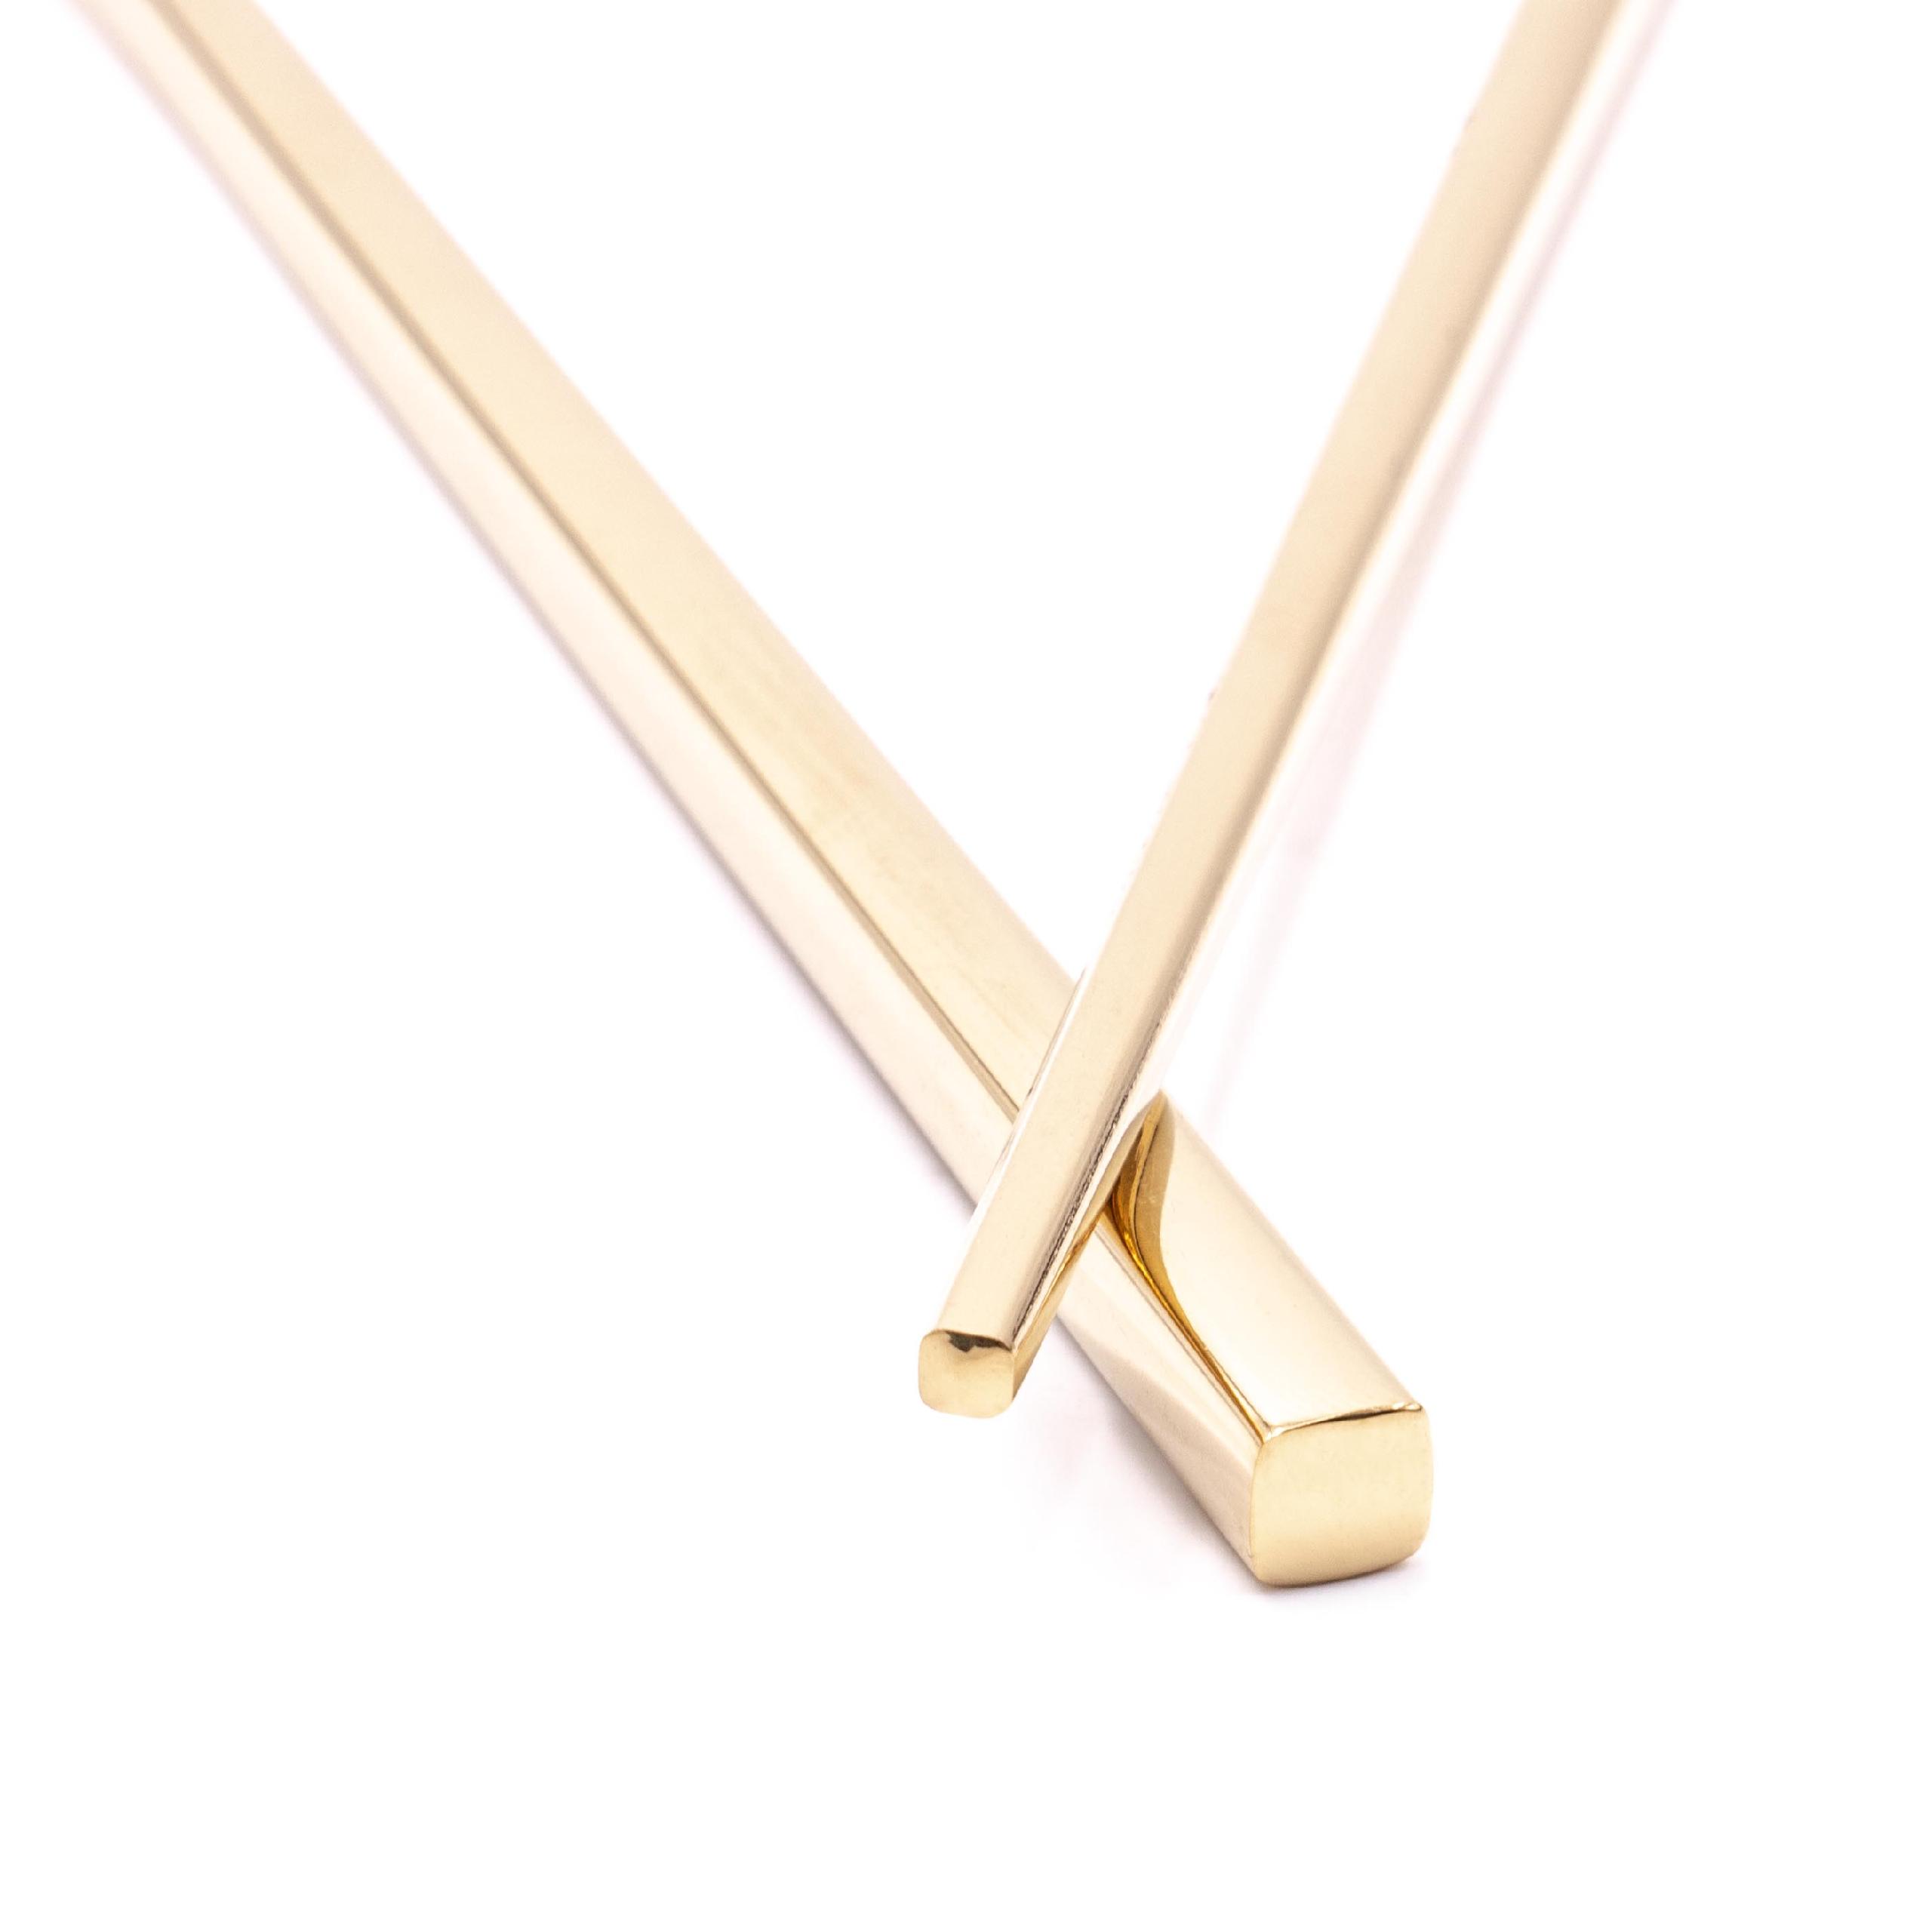 Chopstick Set (1 Pair) - Stainless Steel, gold, 23 cm long, Reusable